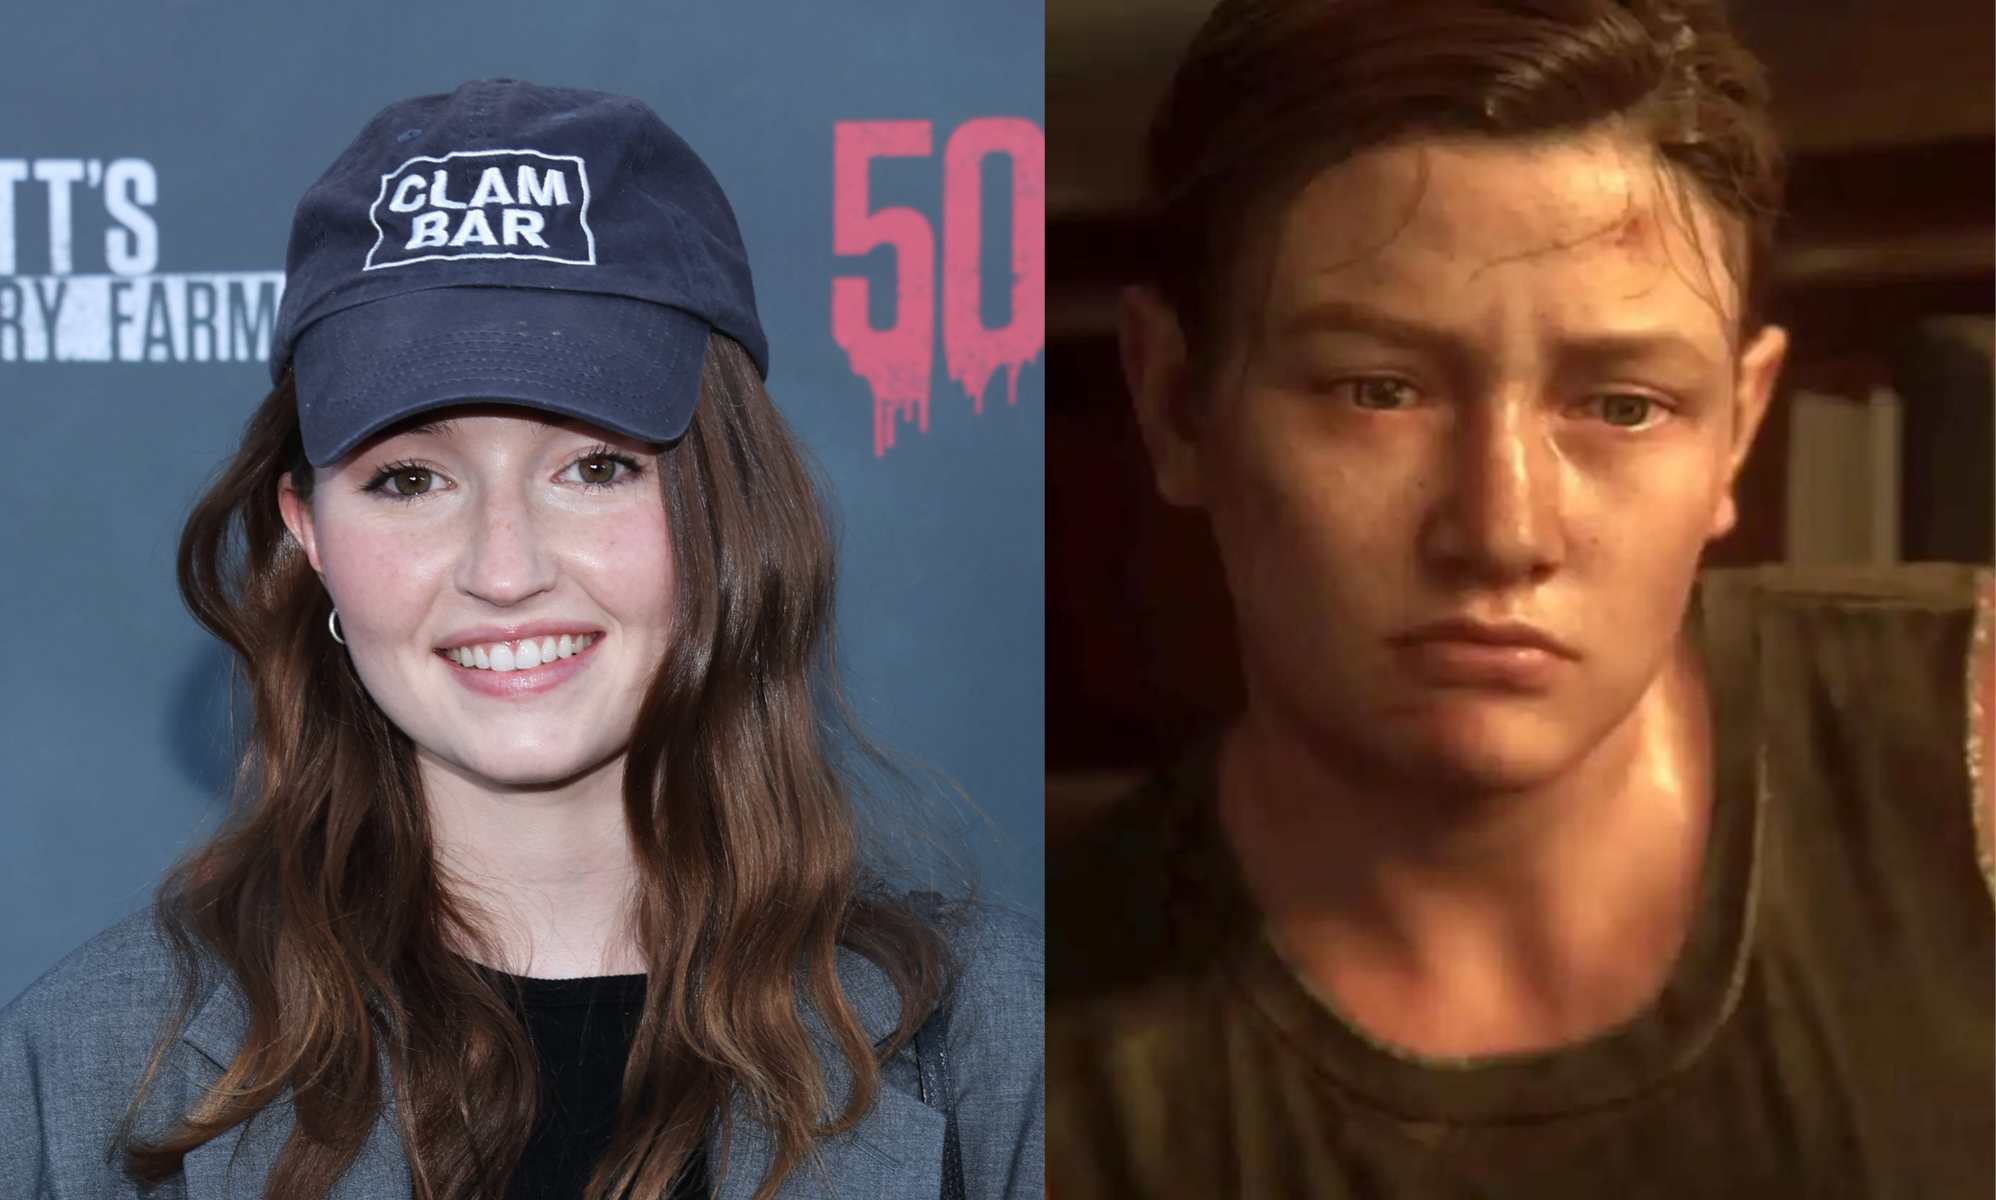 The Last Of Us season 2 casts its Abby